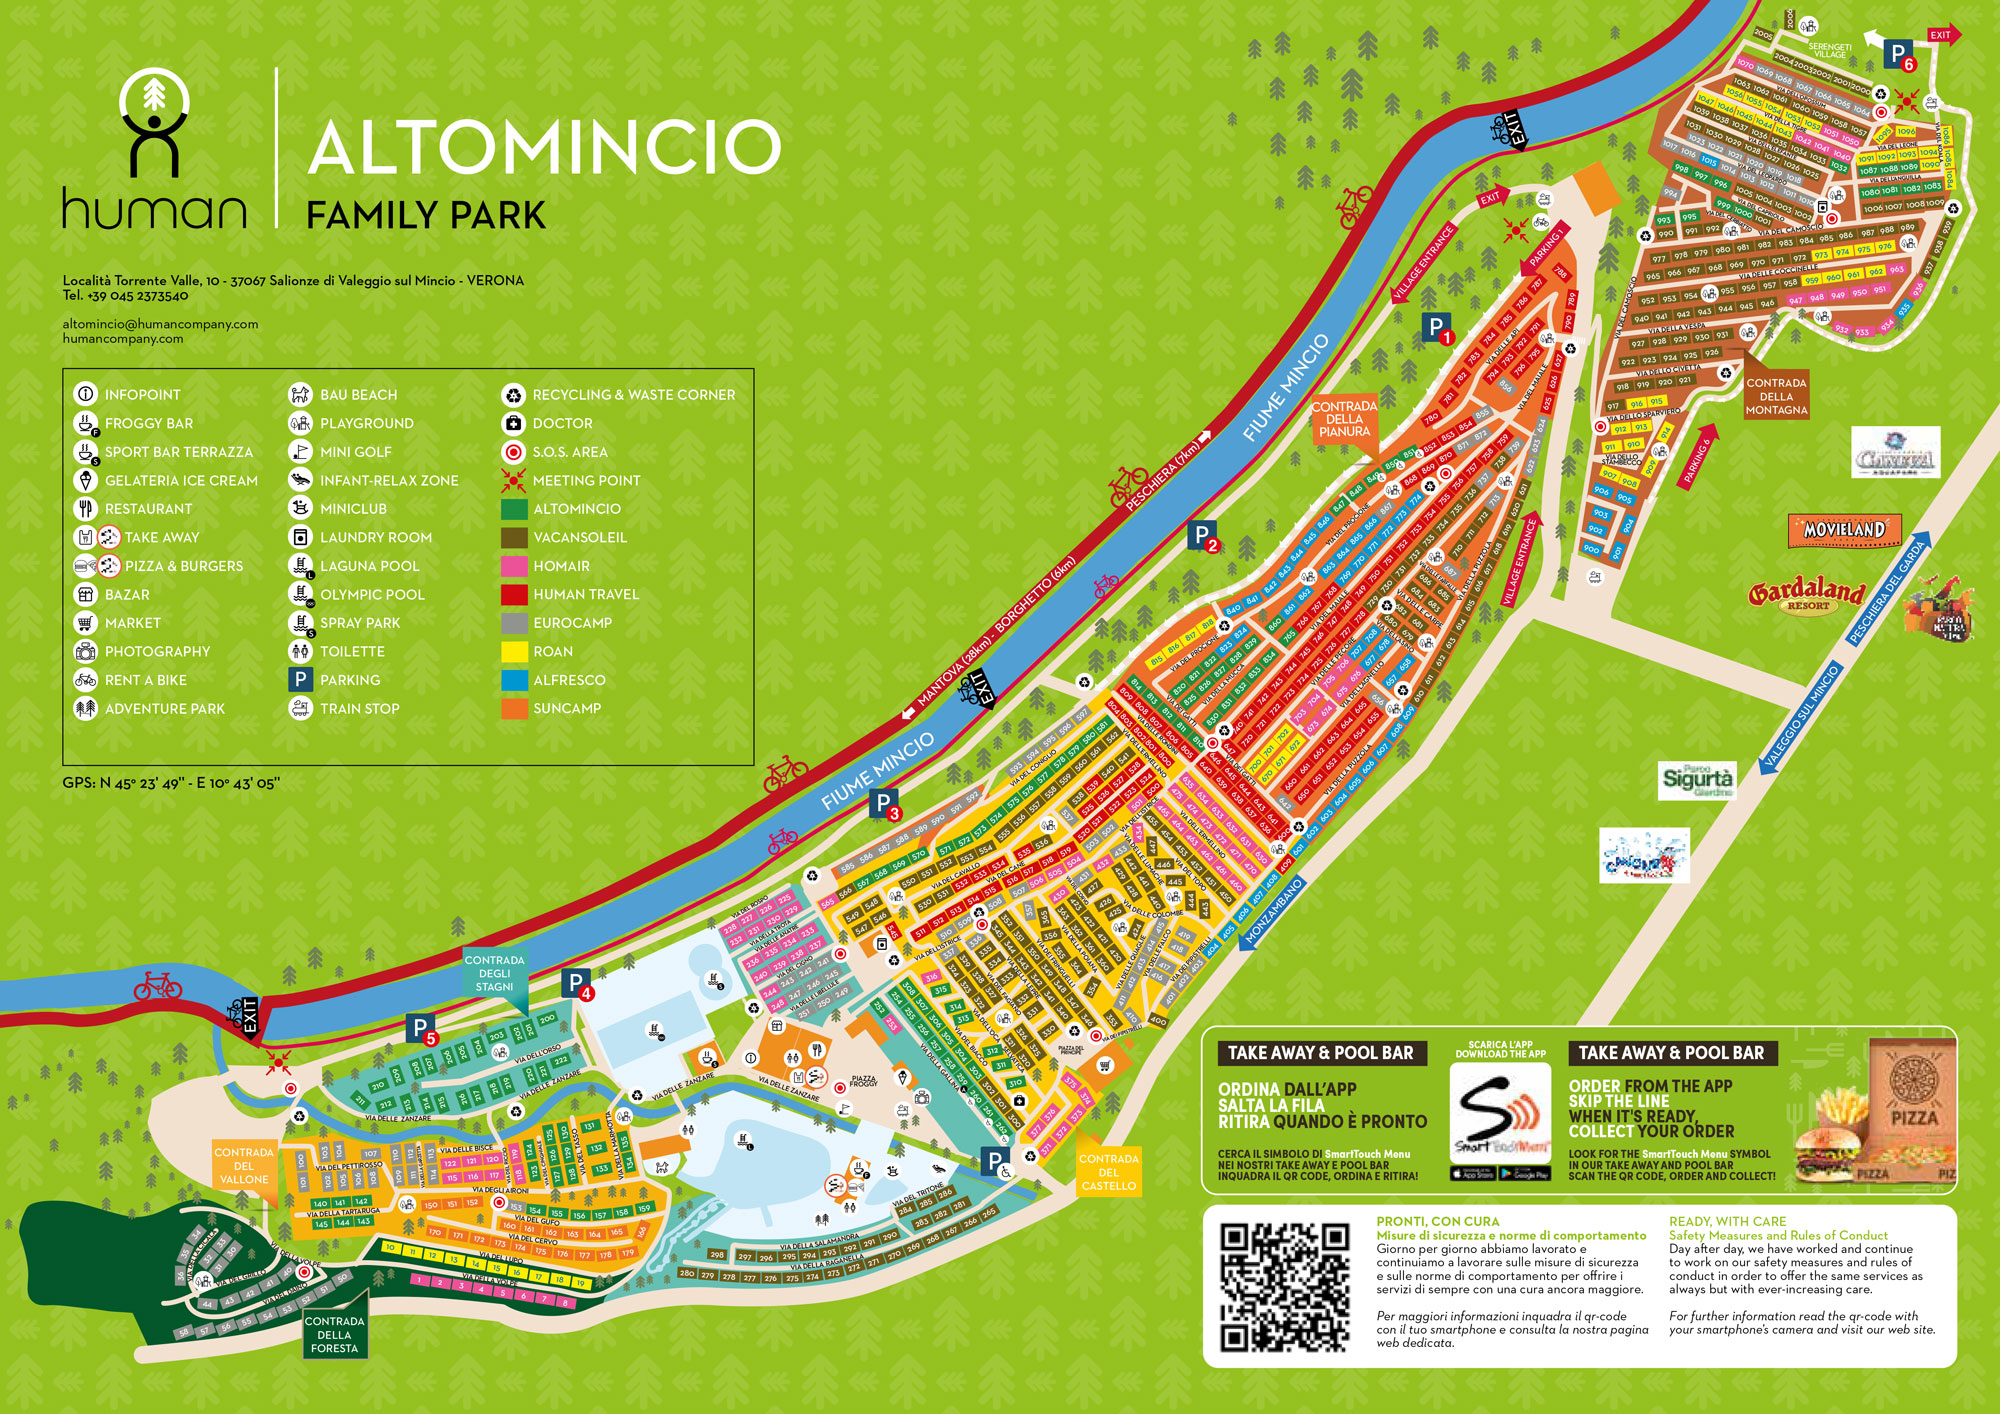 Altomincio Family Park